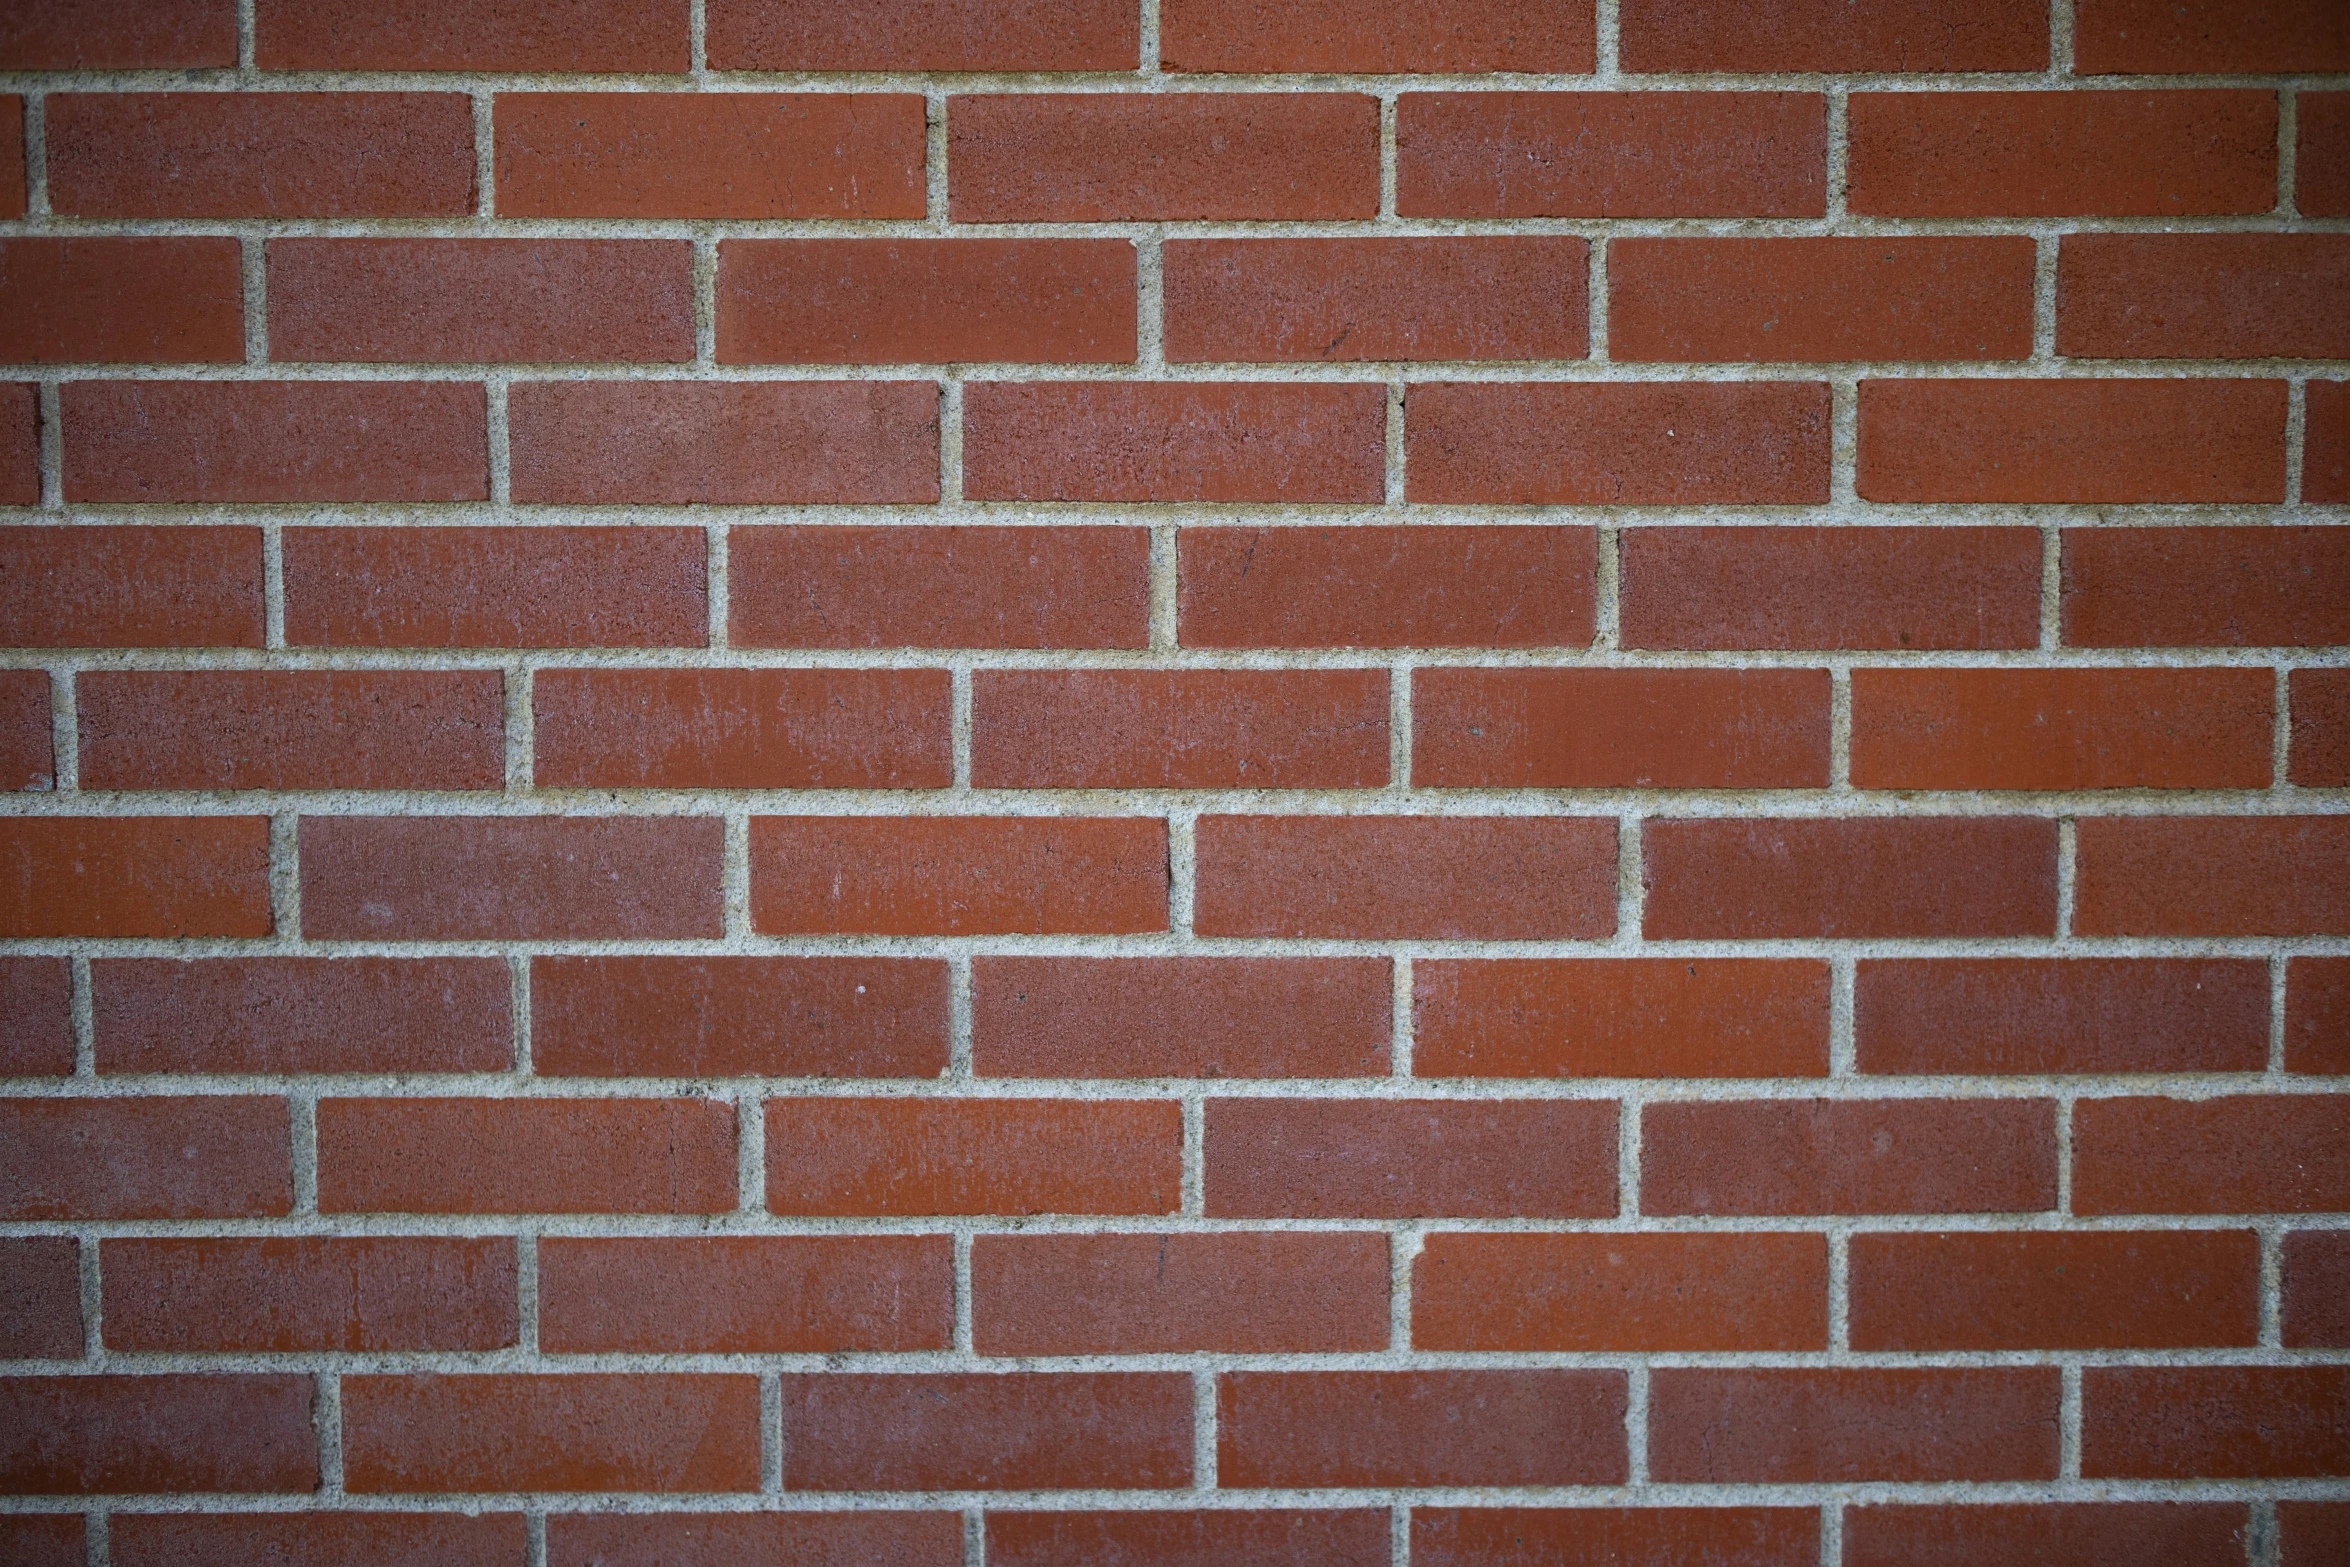 a brick wall with small, thin bricks and light brown grates